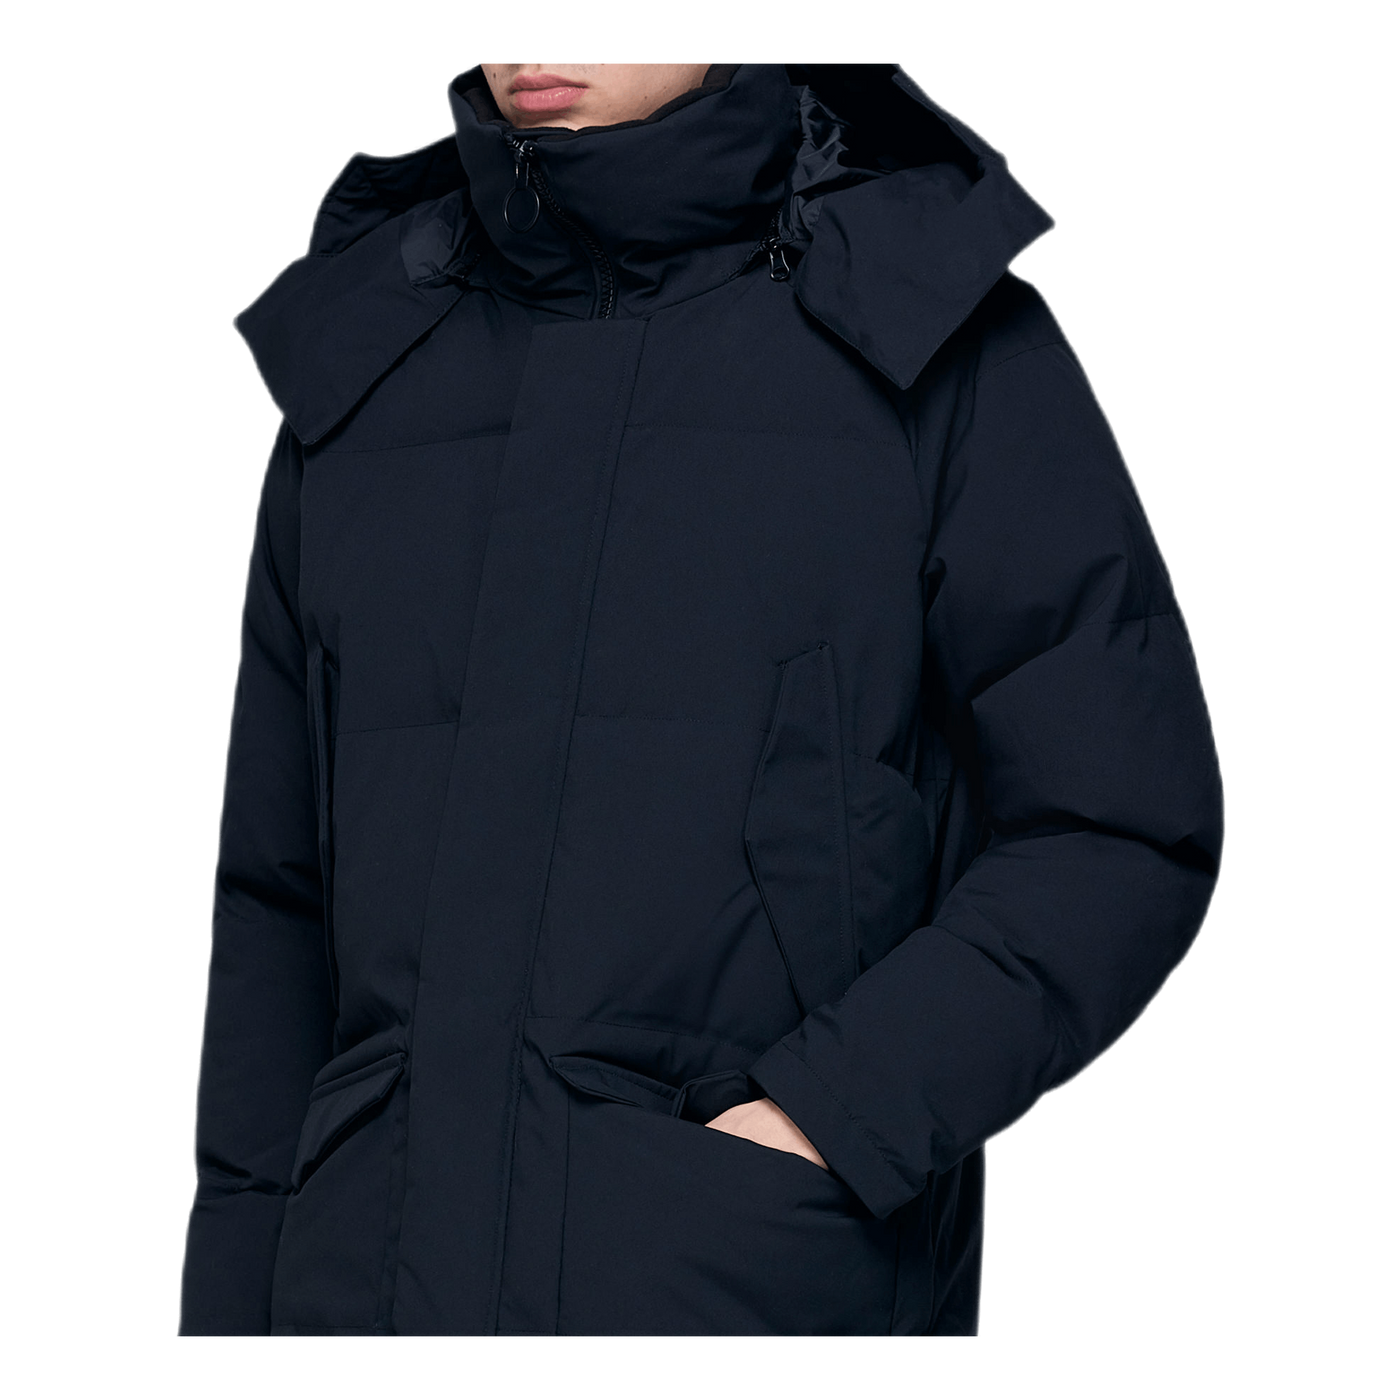 Warm Jacket Black